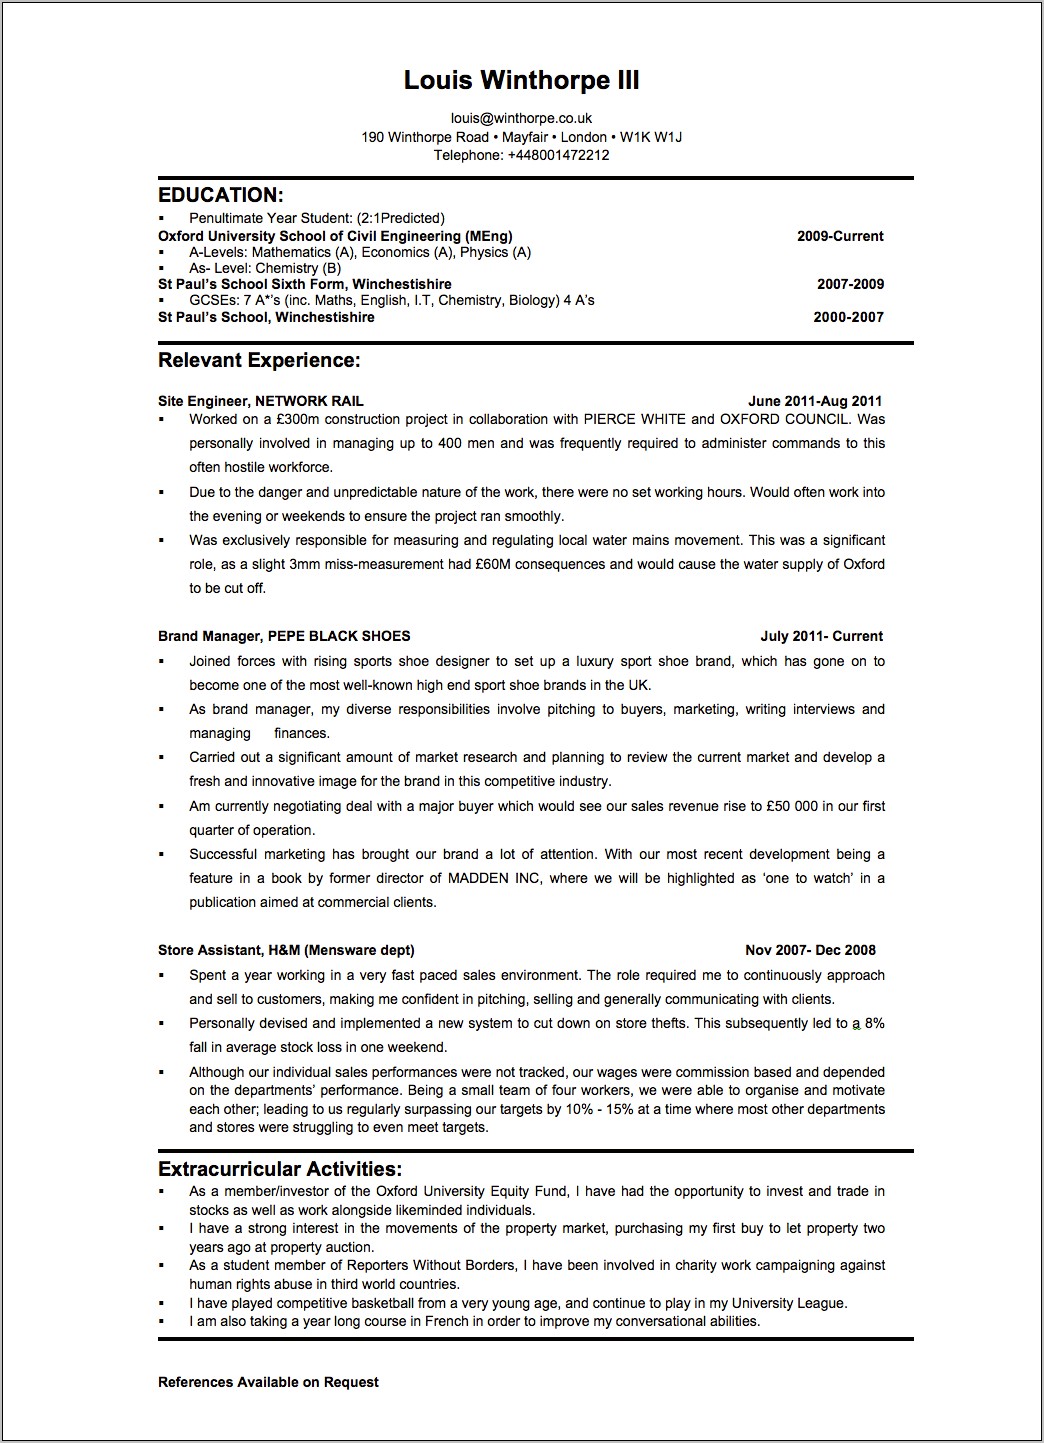 Sample Resume For Bank Internship